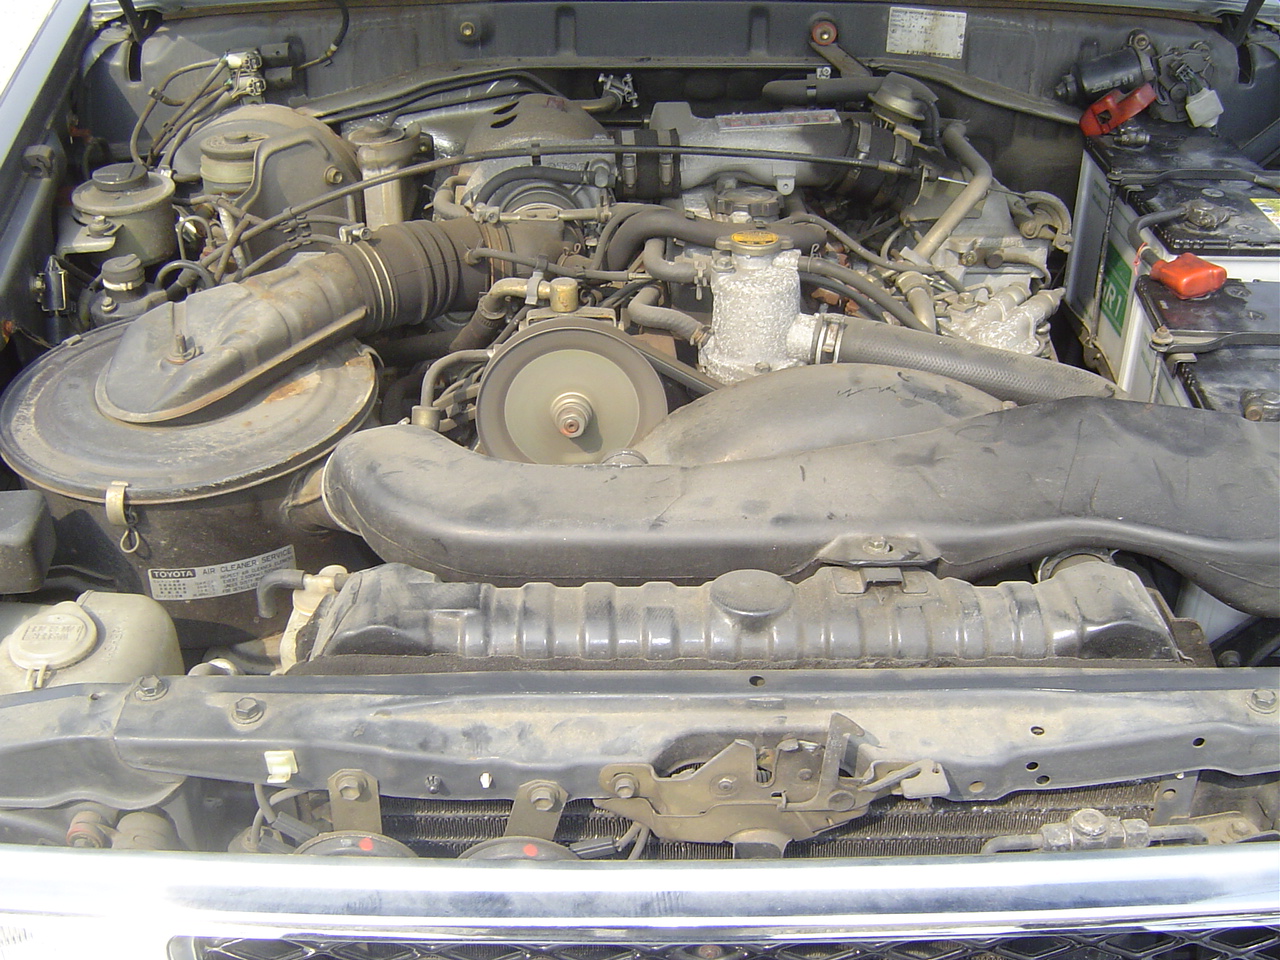 1989 Toyota Landcruiser BJ74 4WD engine